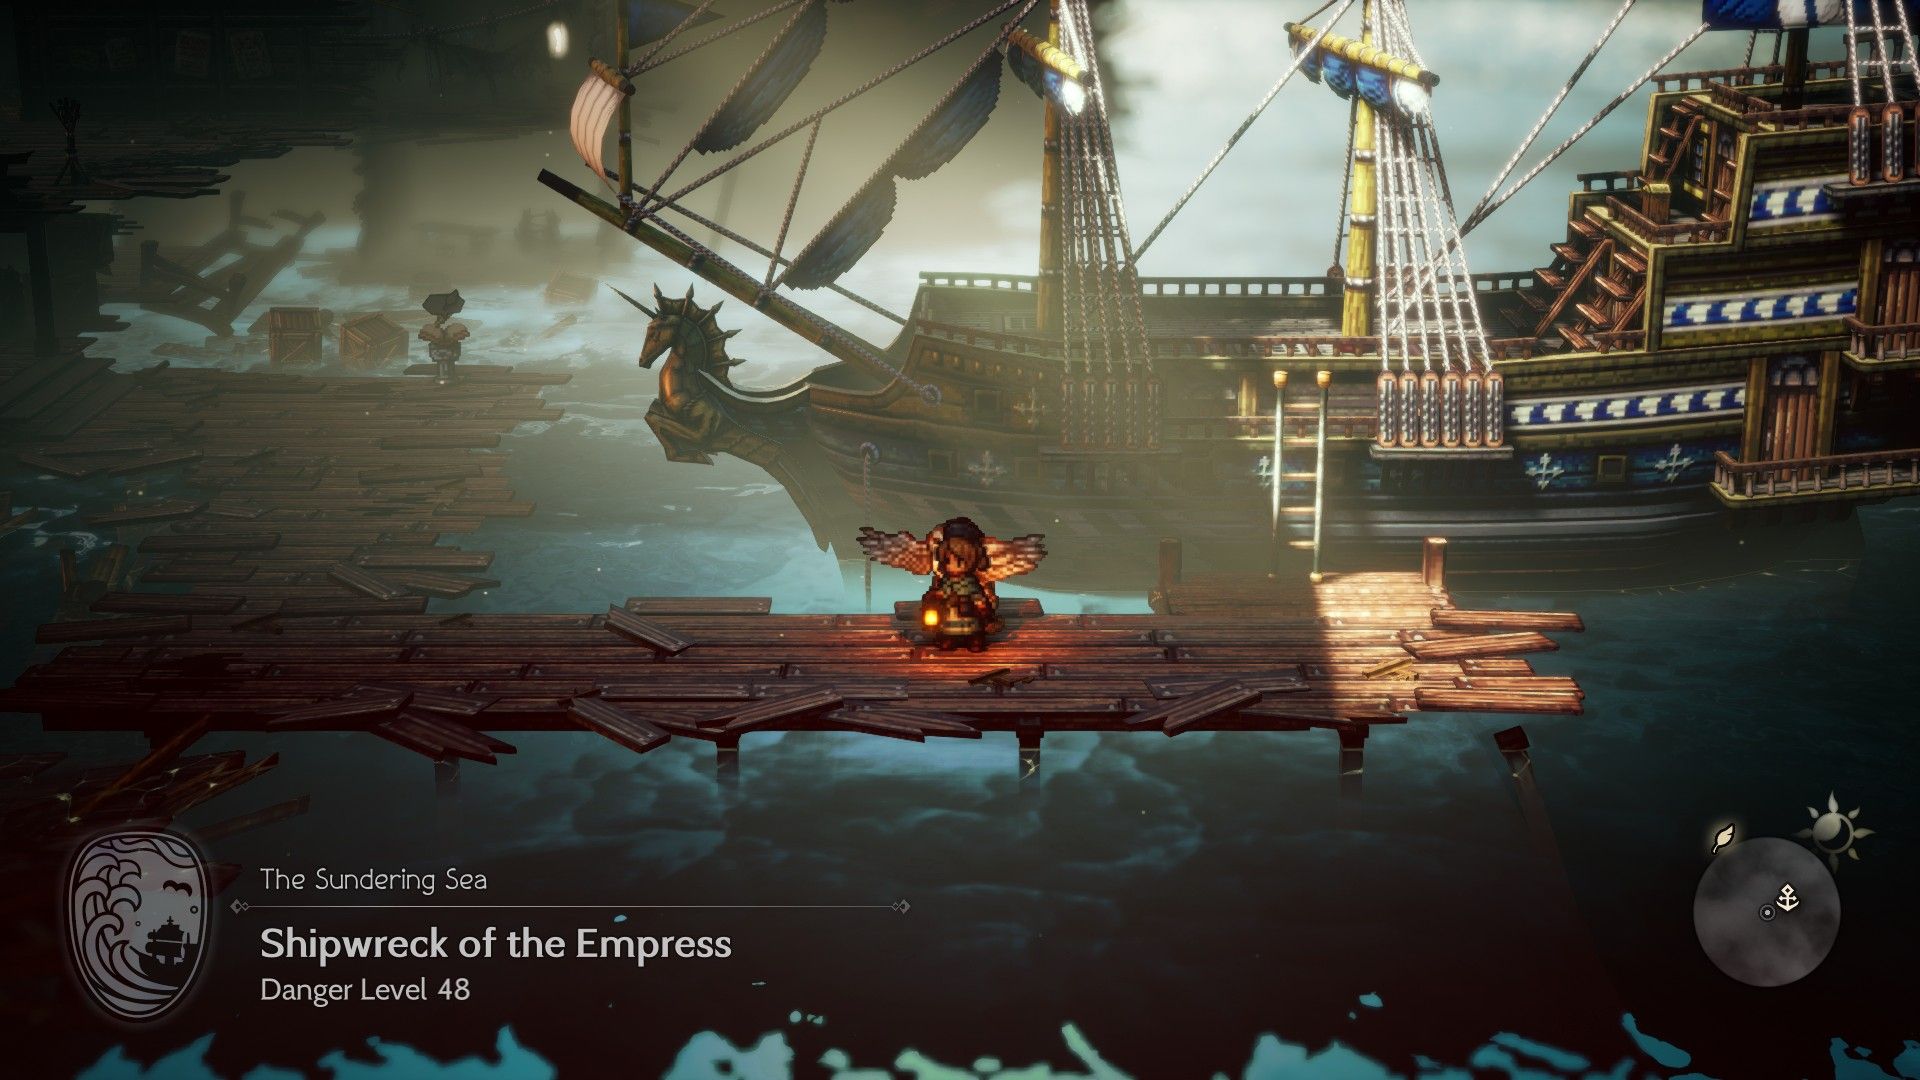 Octopath Traveler 2 Shipwreck of the Empress